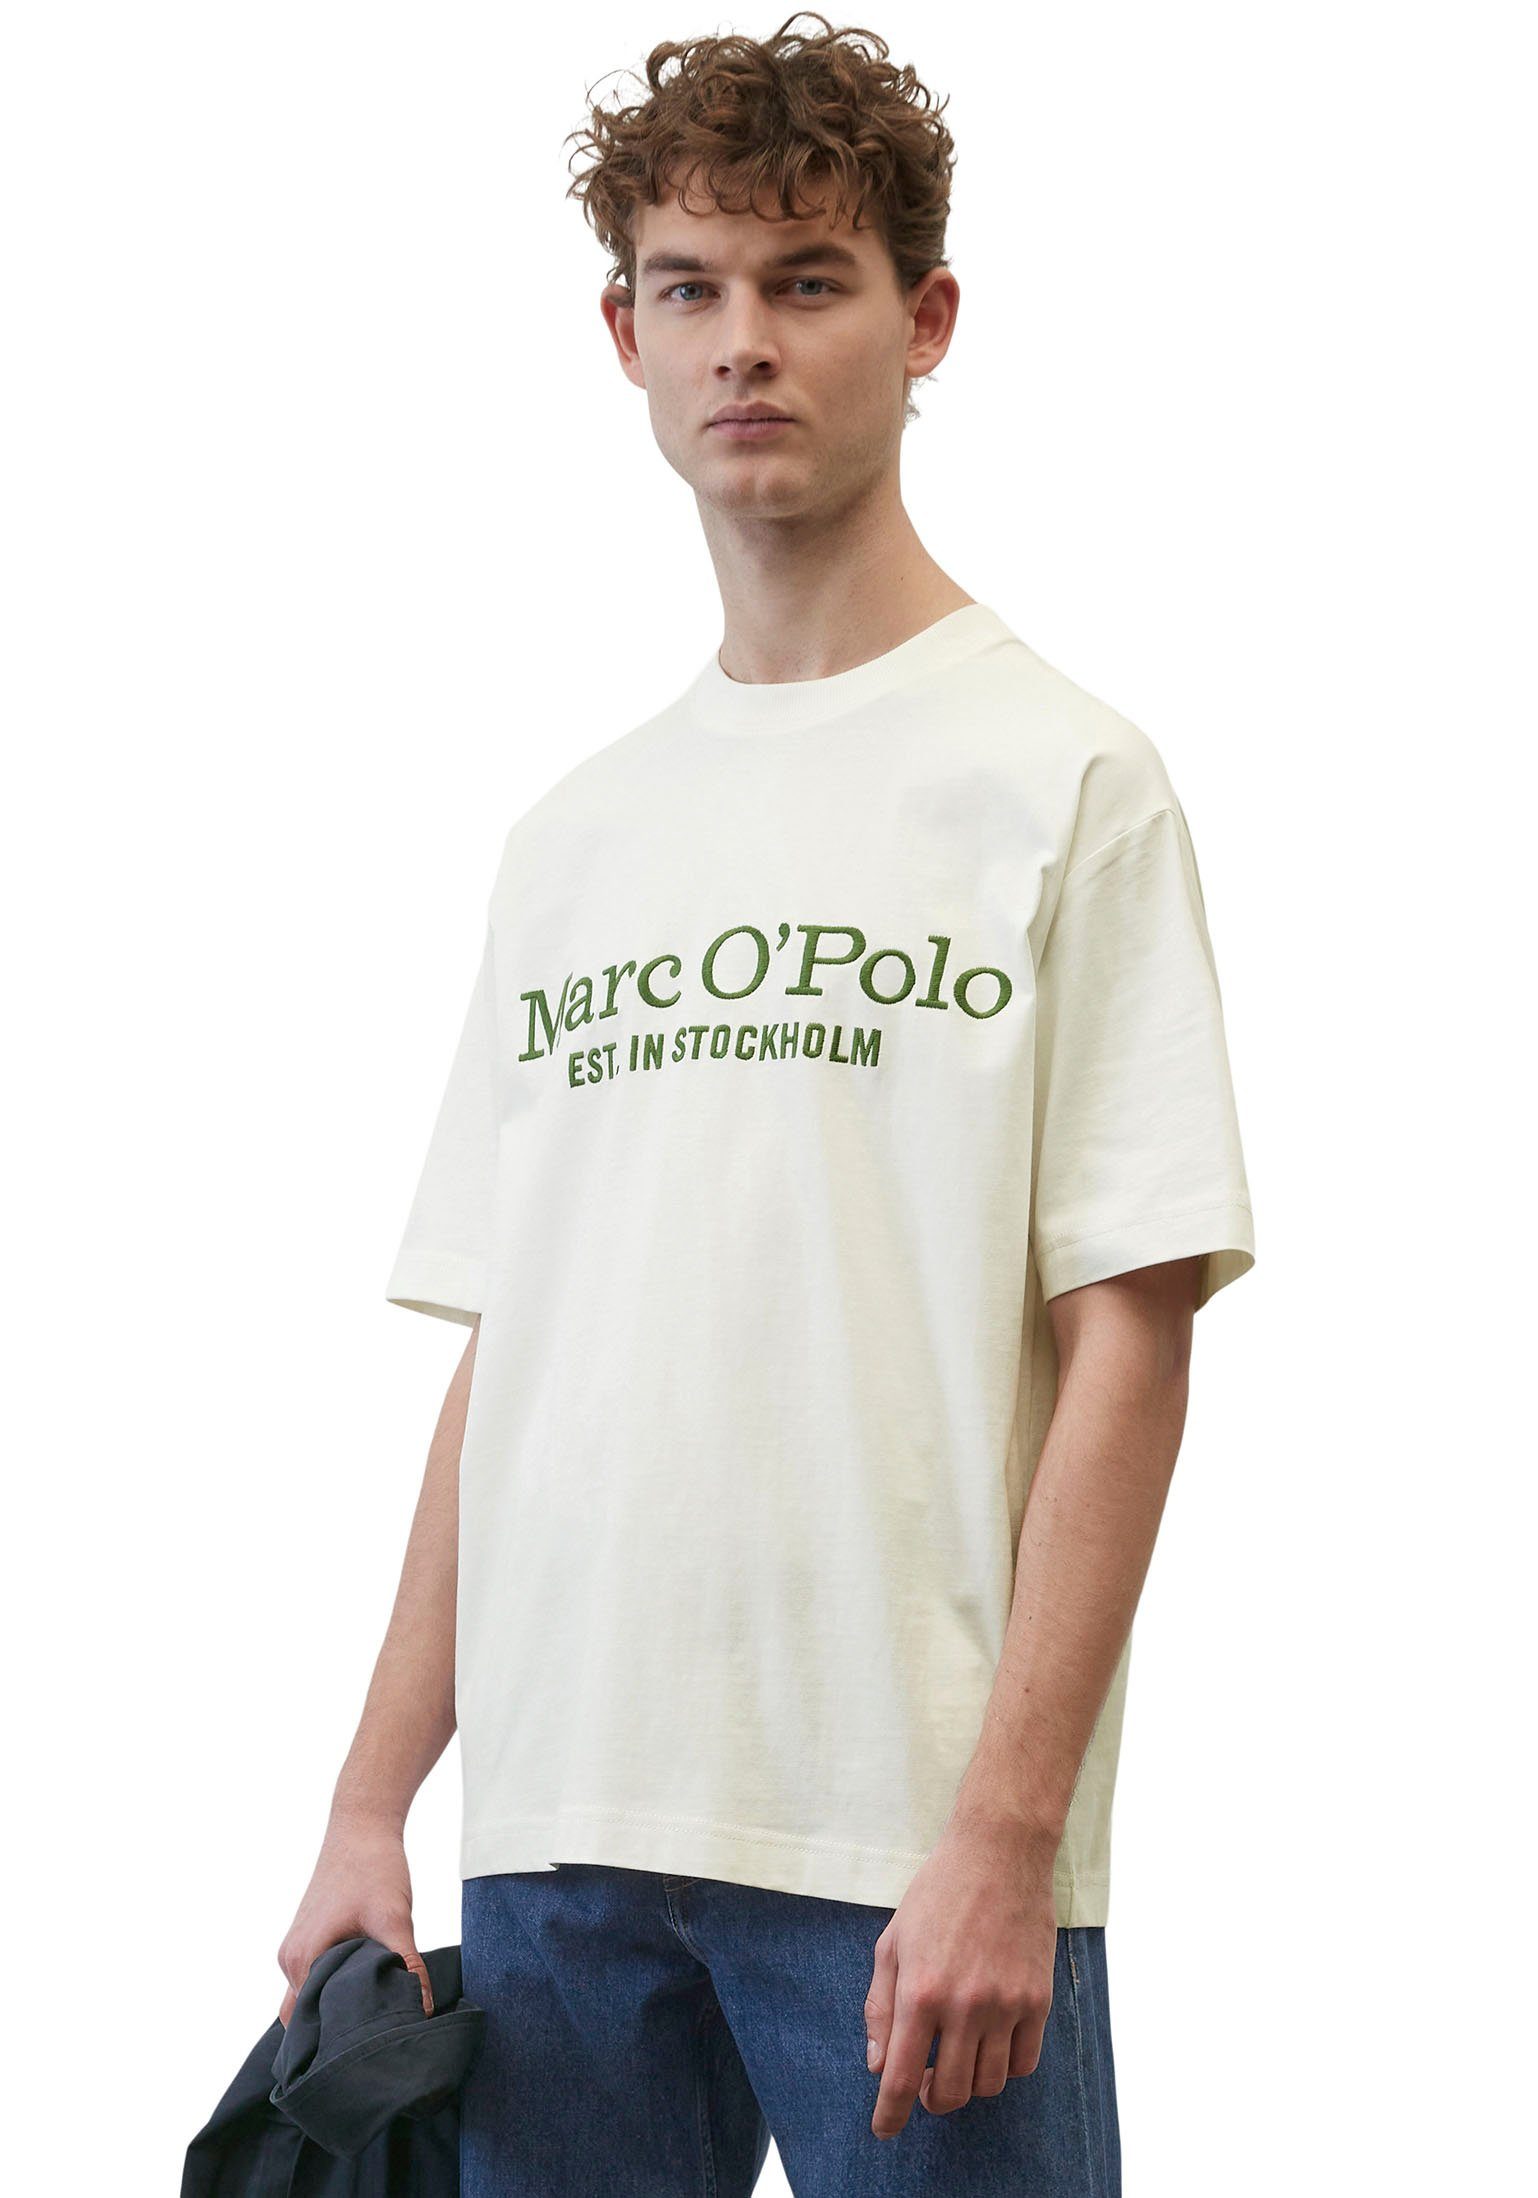 Marc O'Polo Herren Shirts online kaufen | OTTO